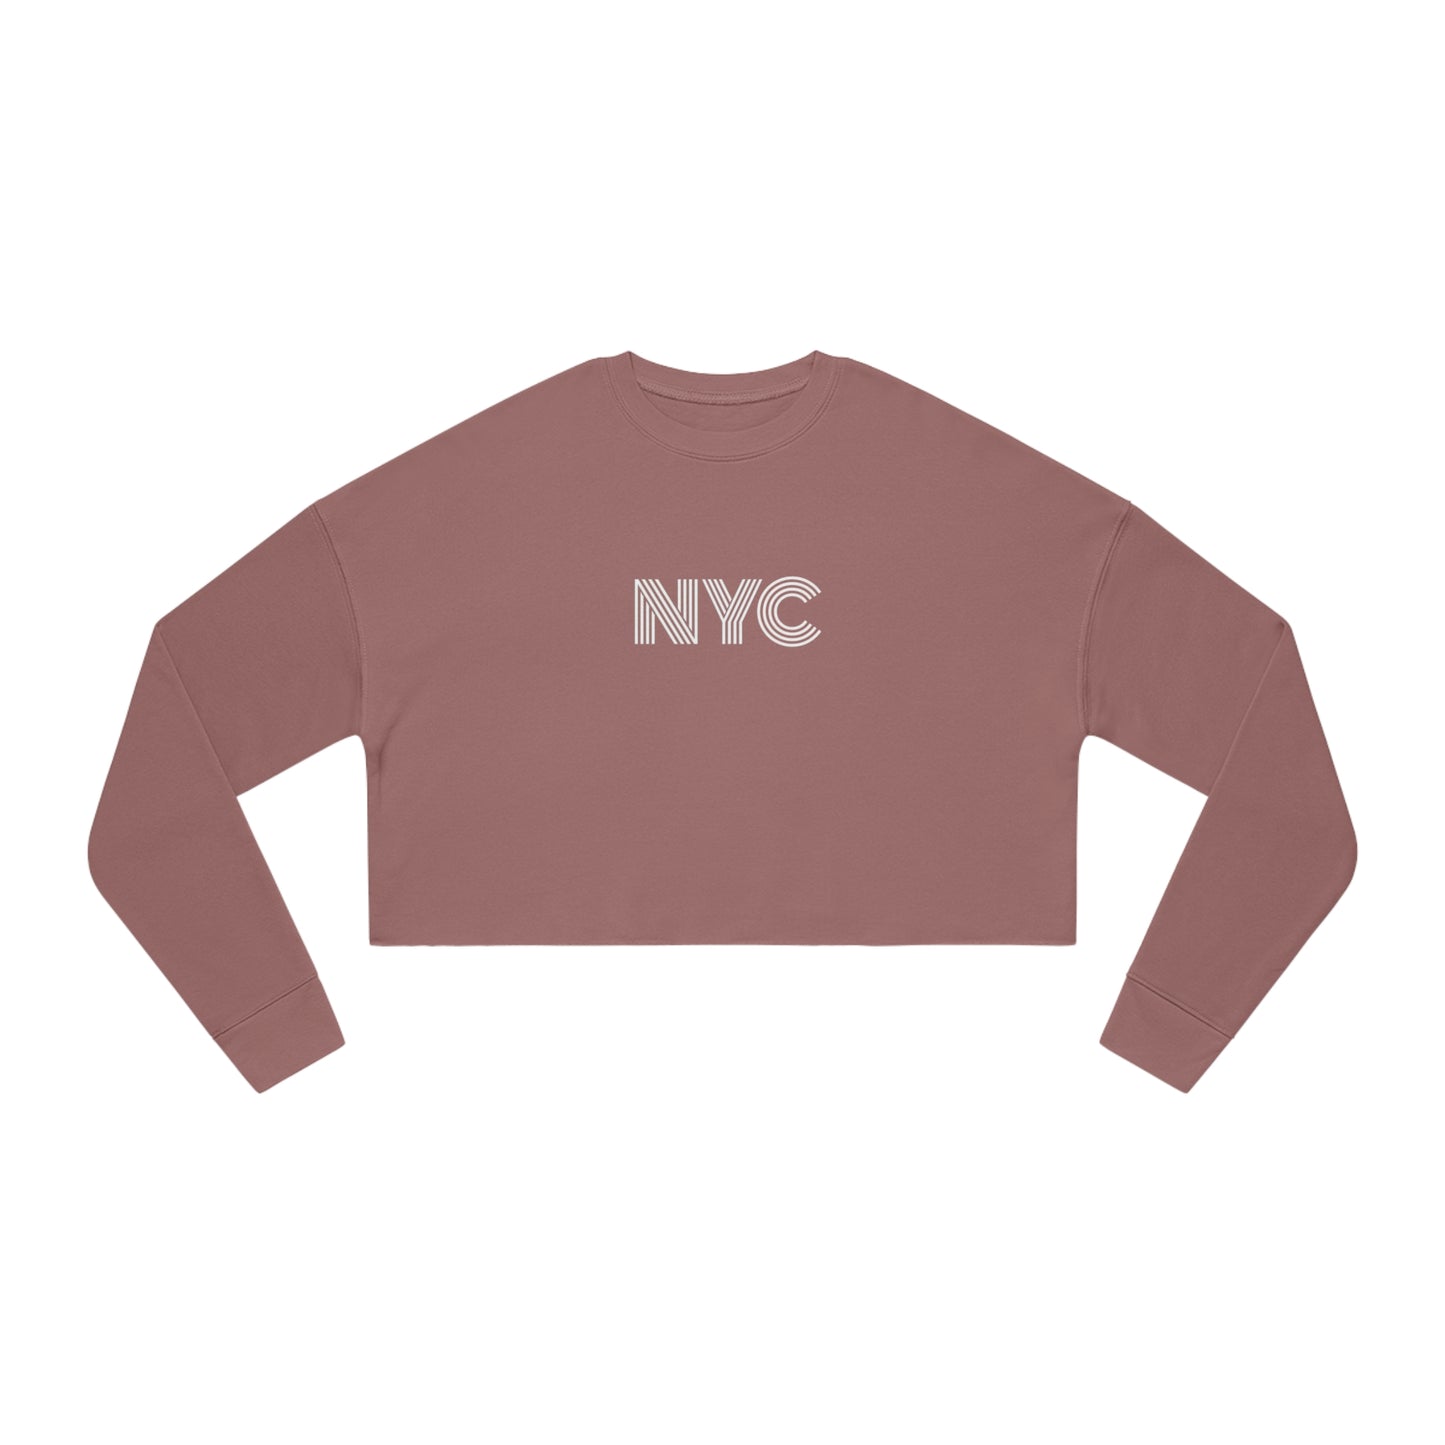 NYC Women's Cropped Sweatshirt